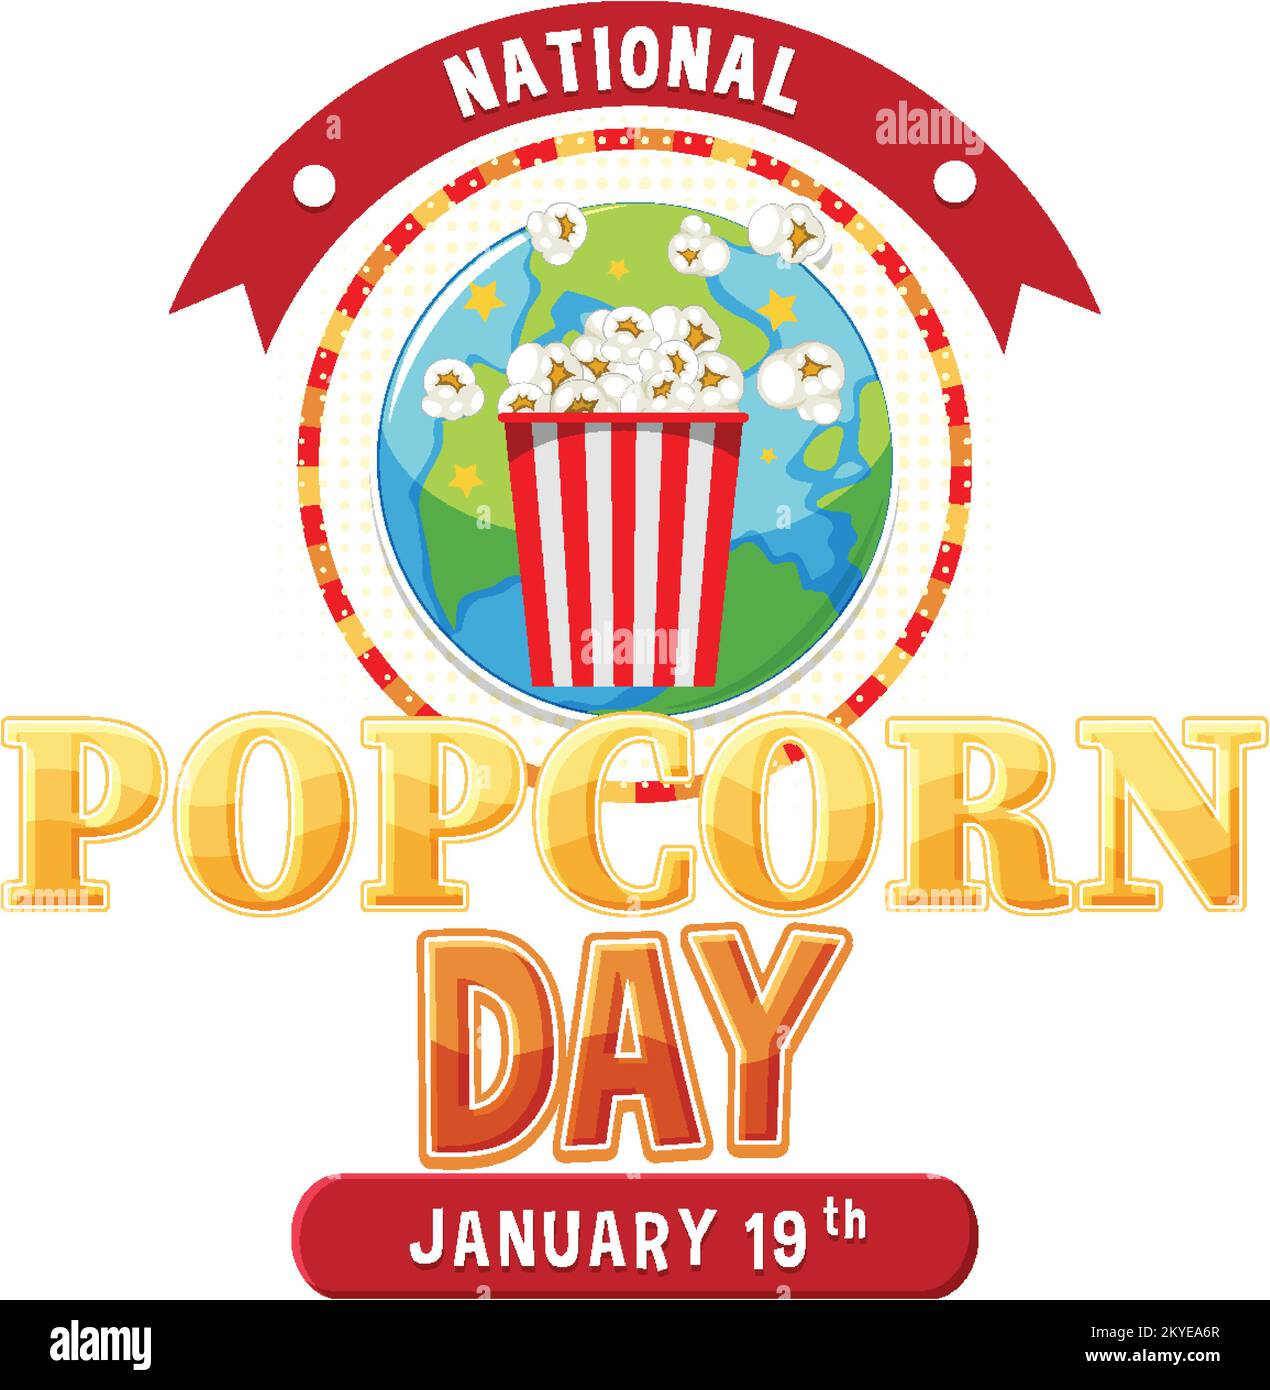 National popcorn day banner design illustration Stock Vector